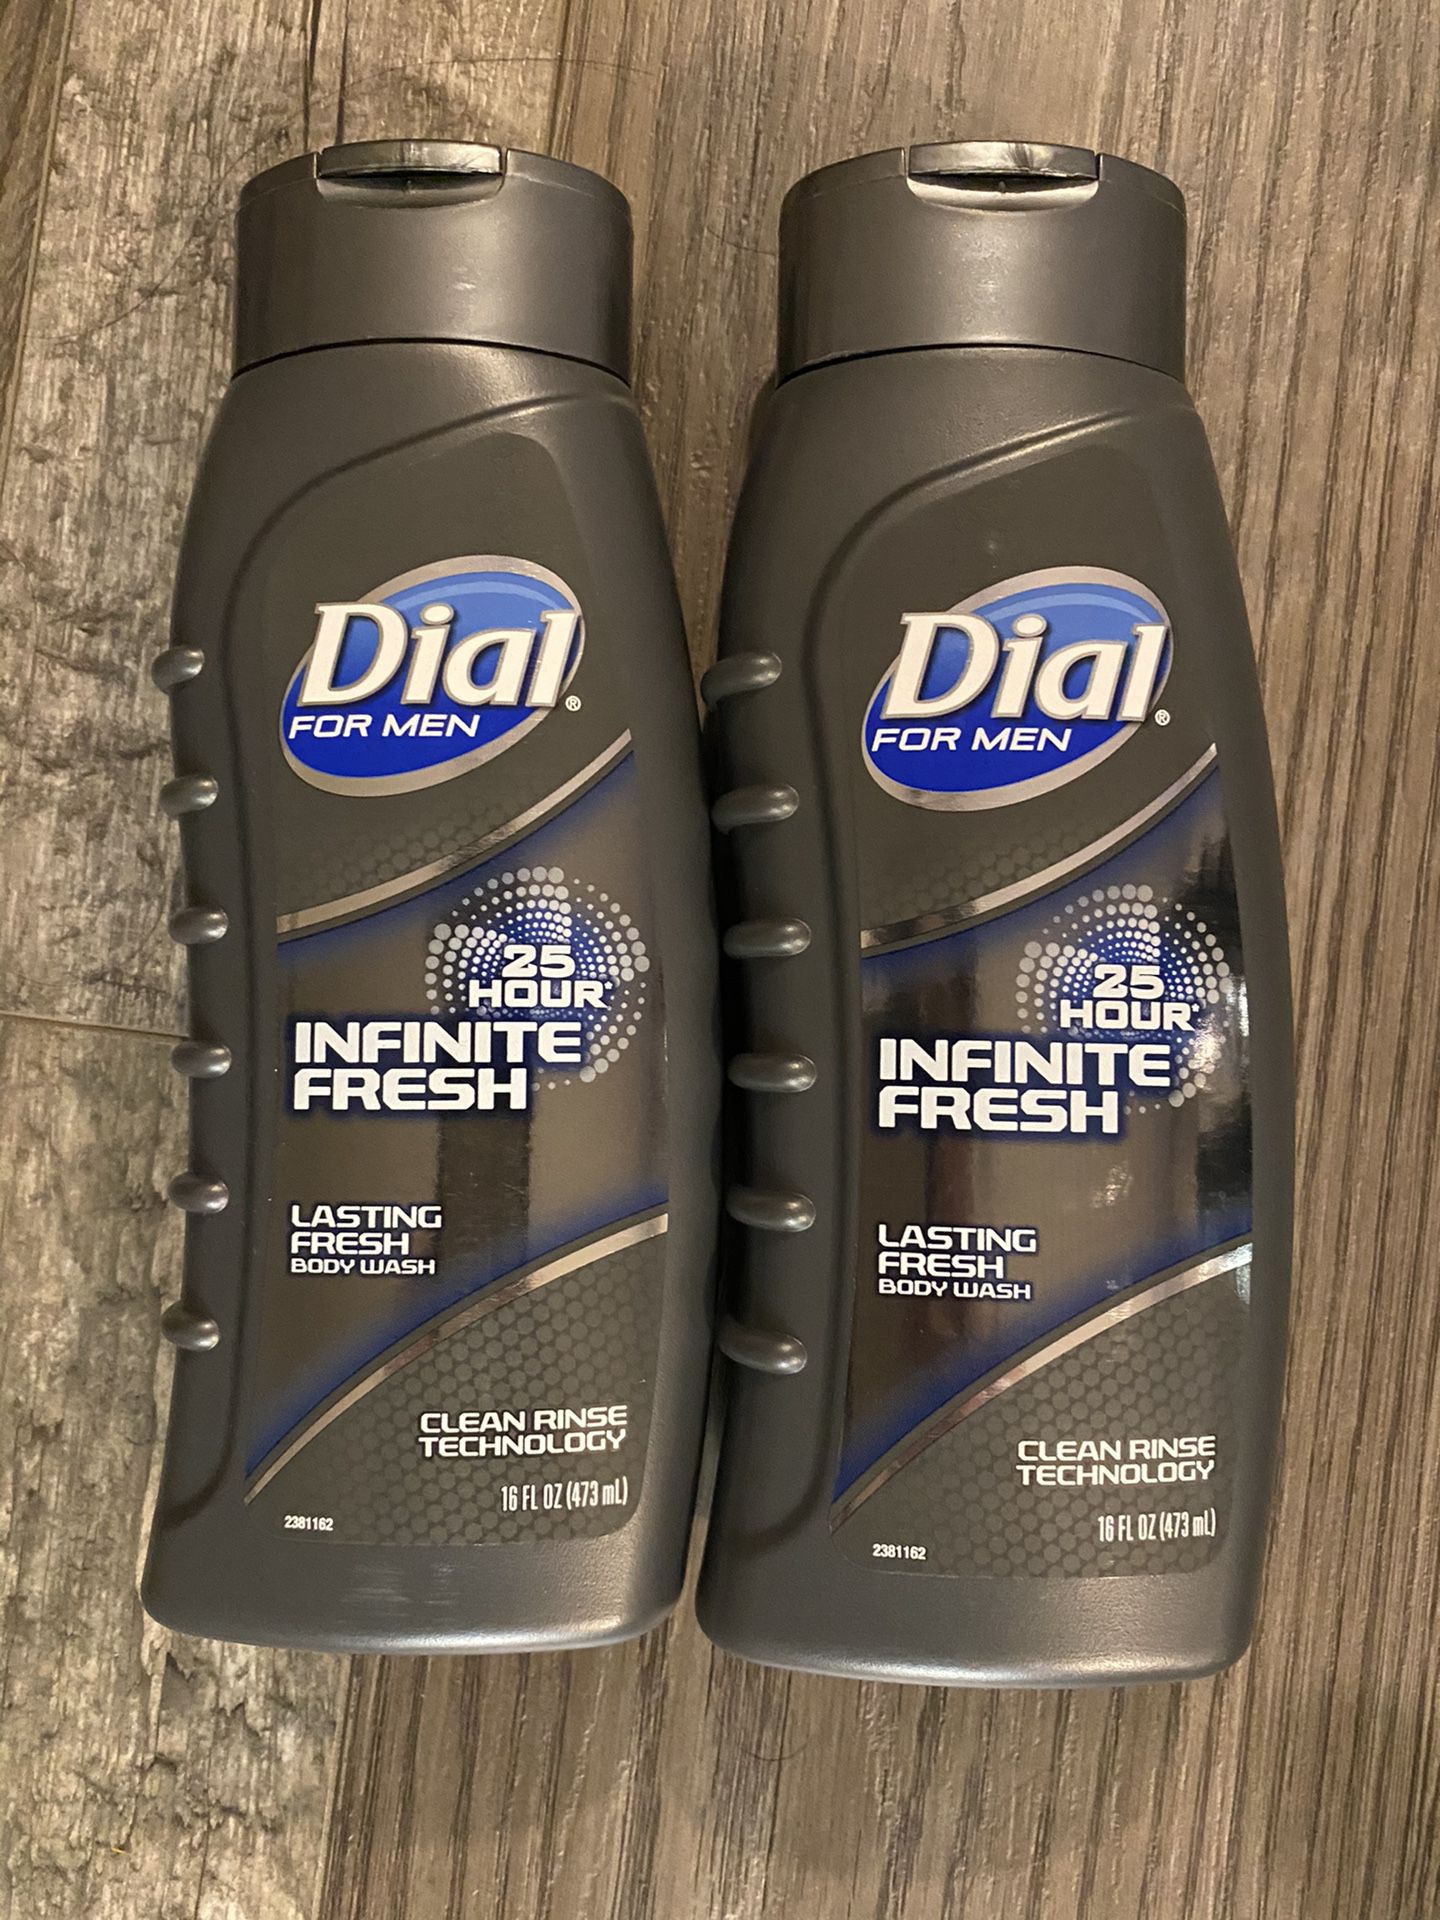 Dial for men infinite fresh body wash $2.75 each